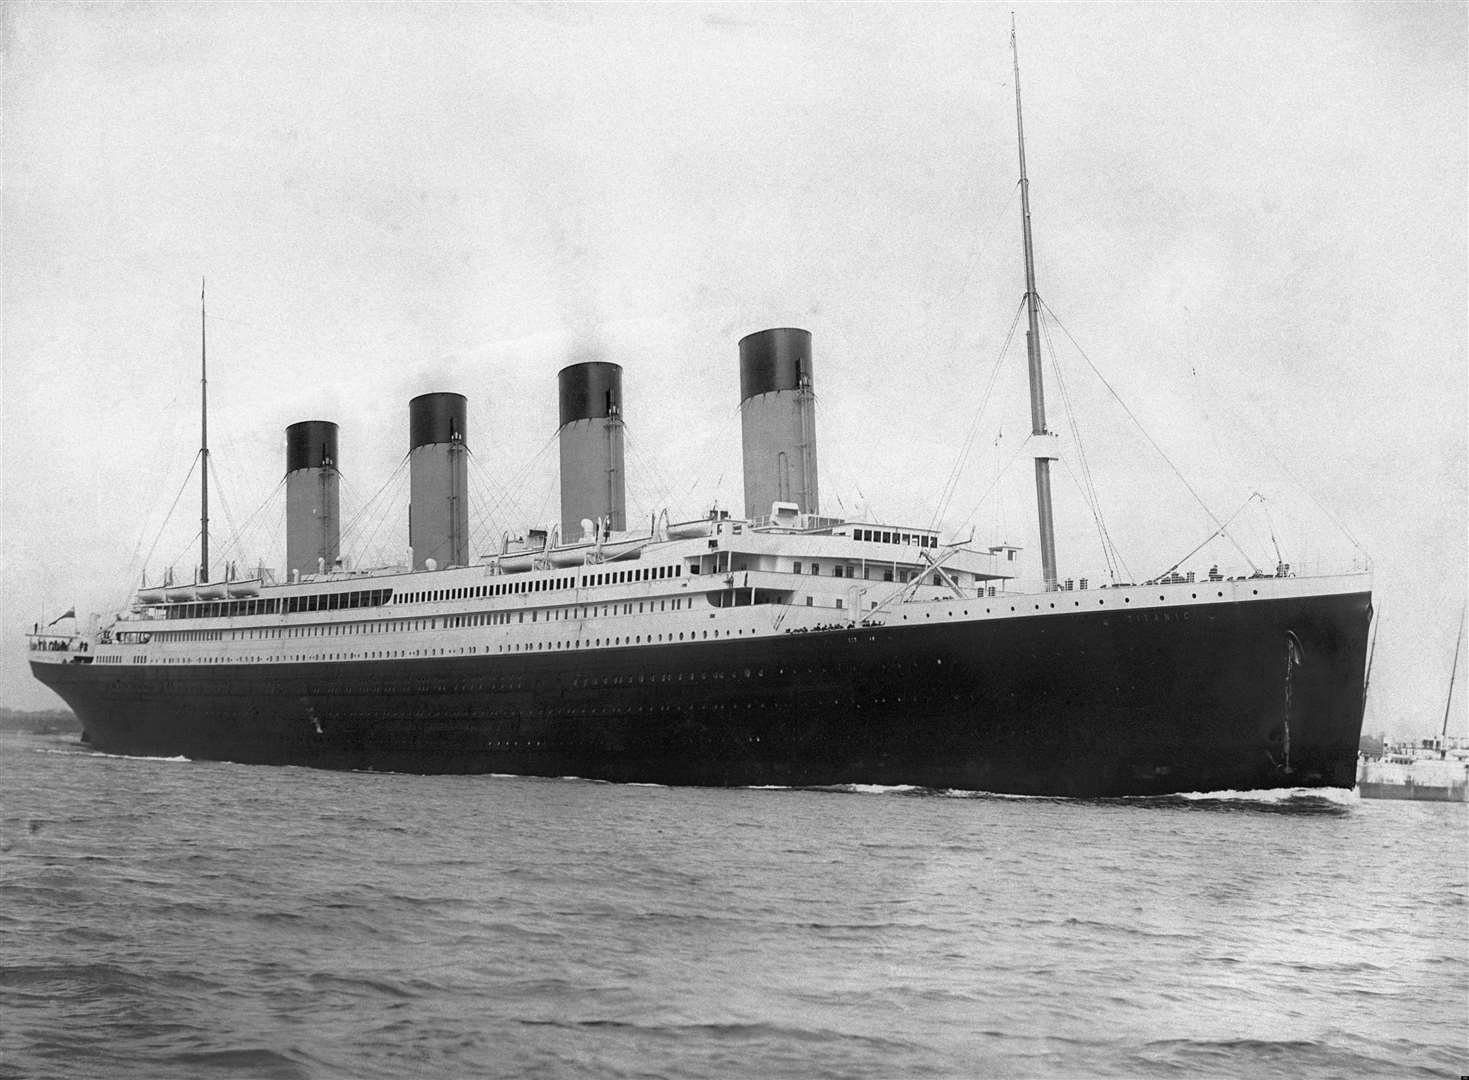 The Titanic was carrying gutta-percha when she sank in 1912